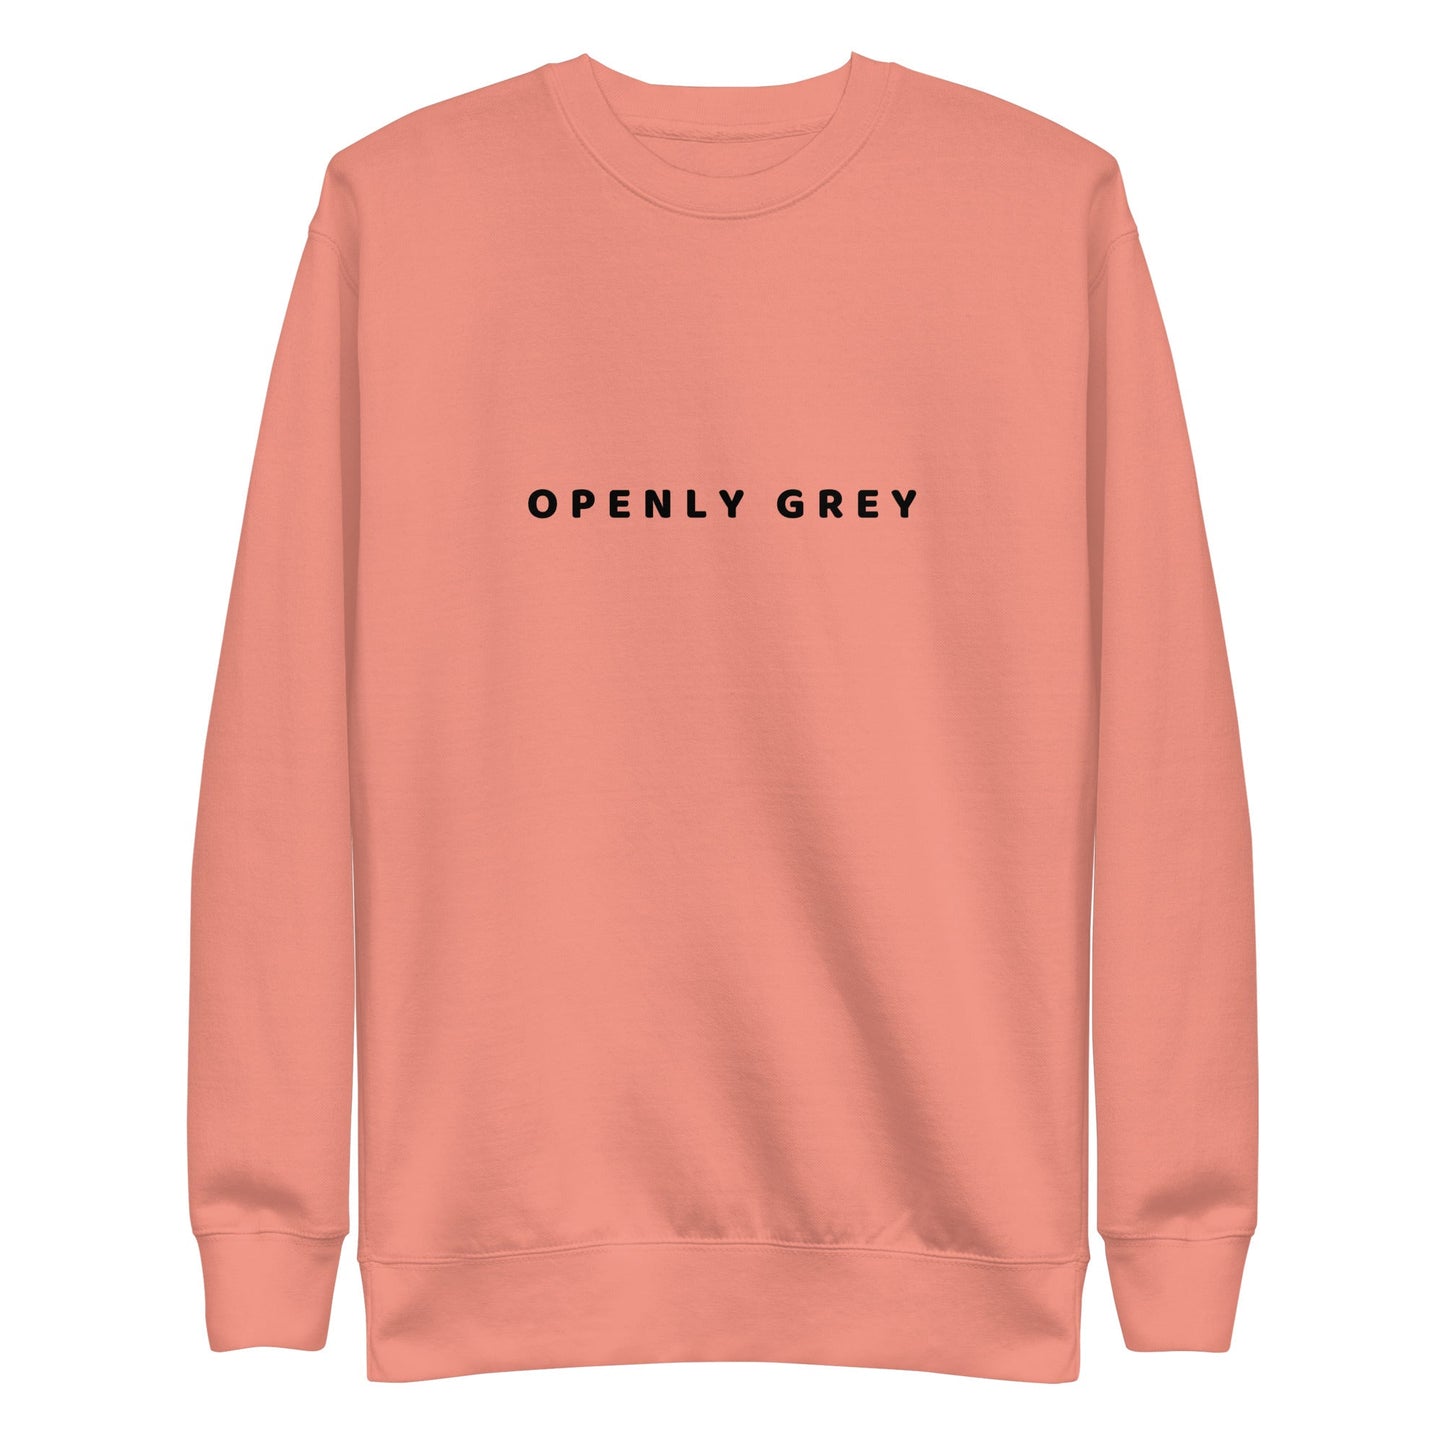 Openly Grey Sweatshirt | Art in Aging